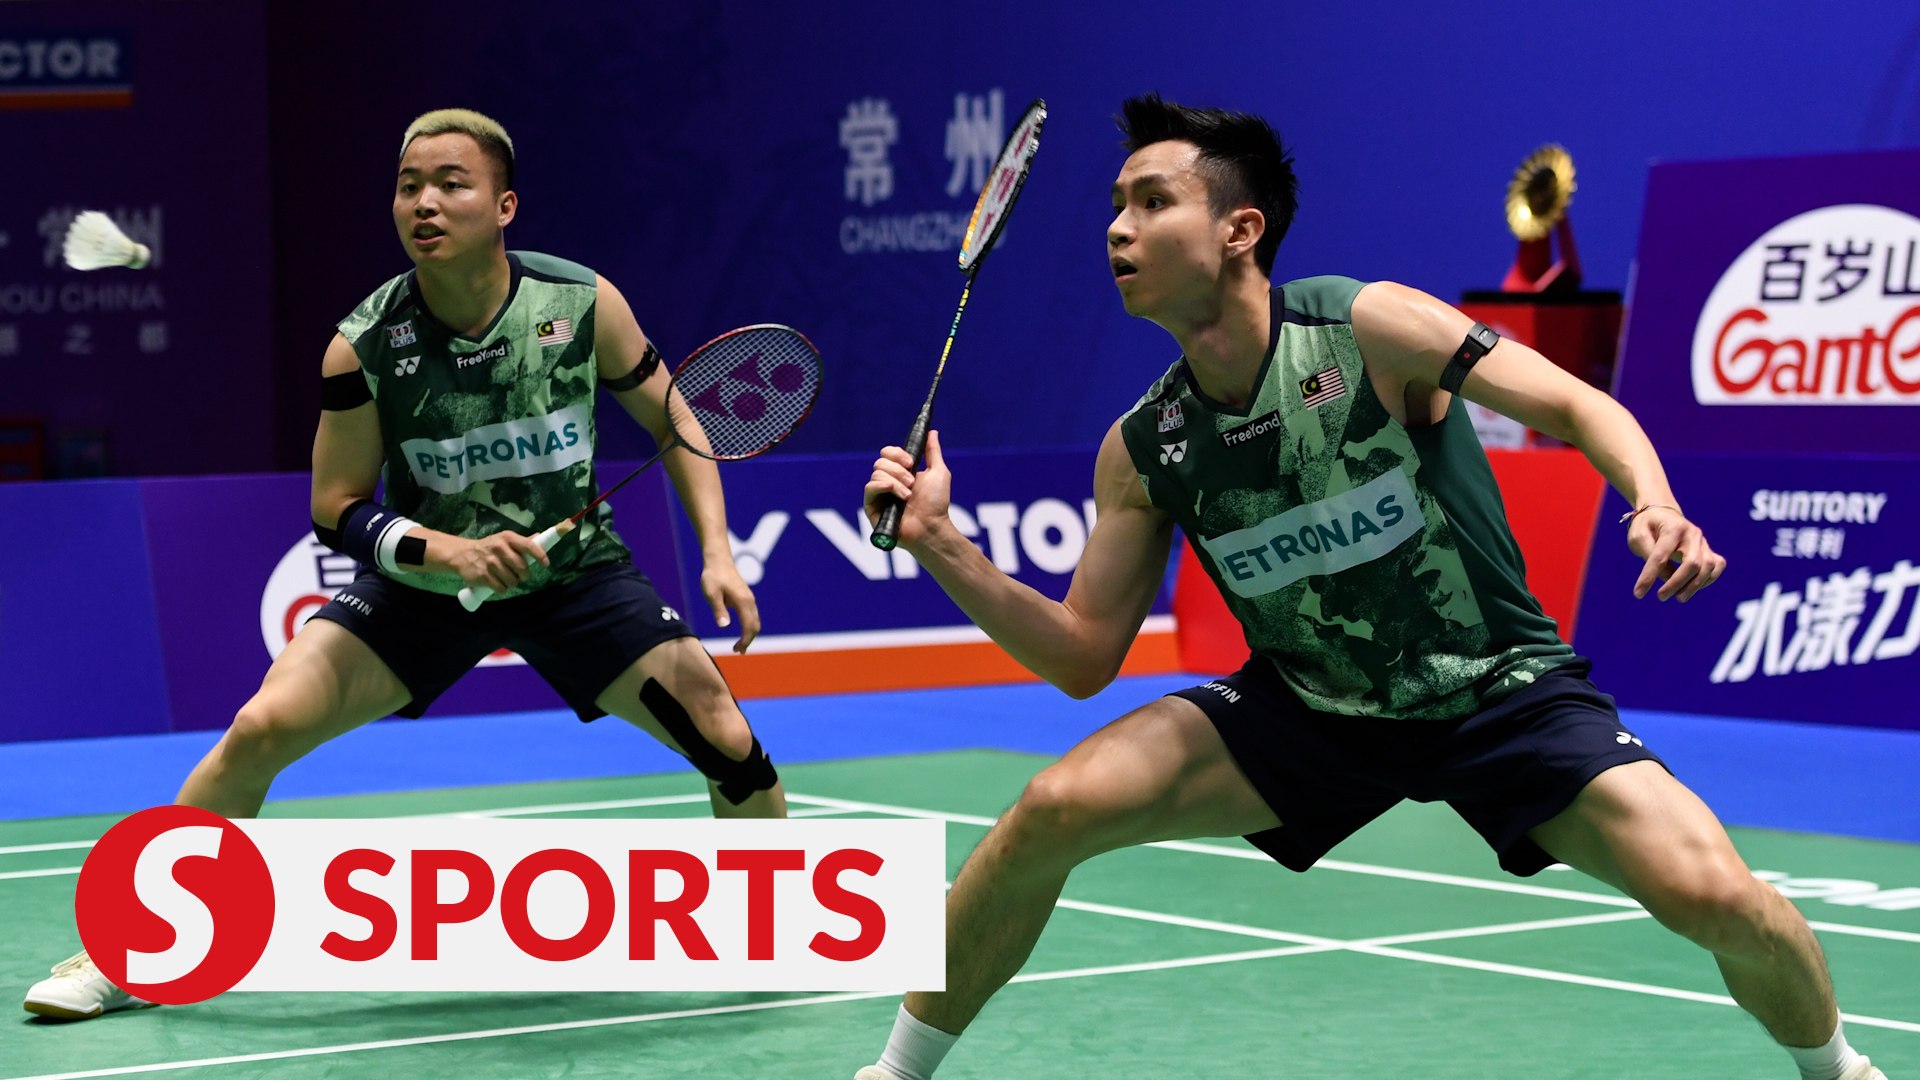 Badminton Aaron Chia-Soh Wooi Yik suffer great fall in China, their 10th defeats in finals